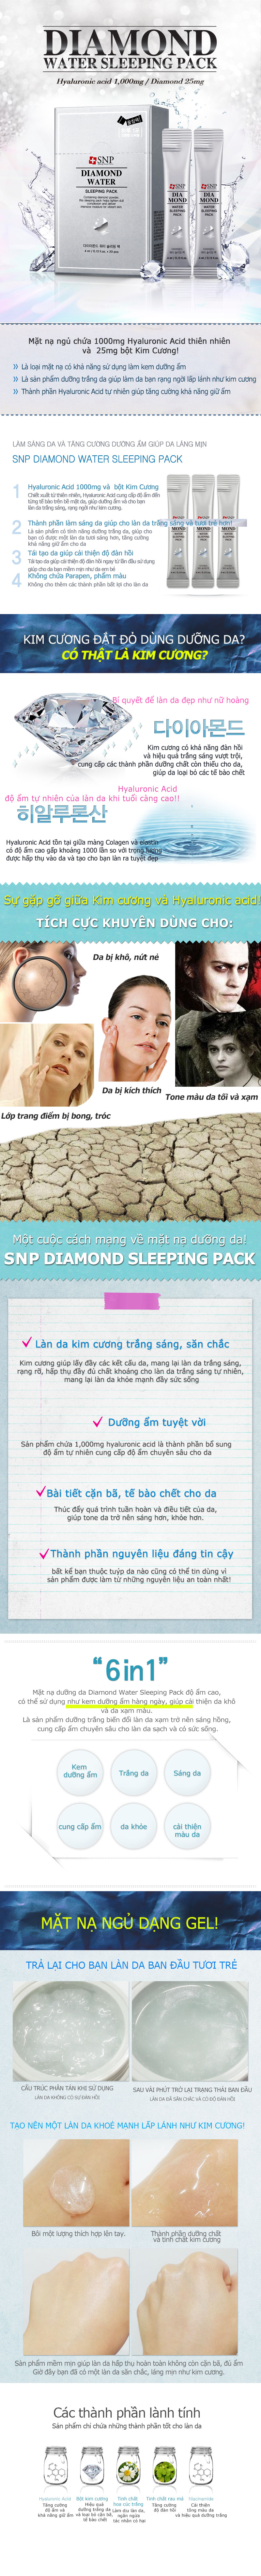 Mặt nạ ngủ dưỡng ẩm Diamond Water - DIAMOND WATER SLEEPING PACK